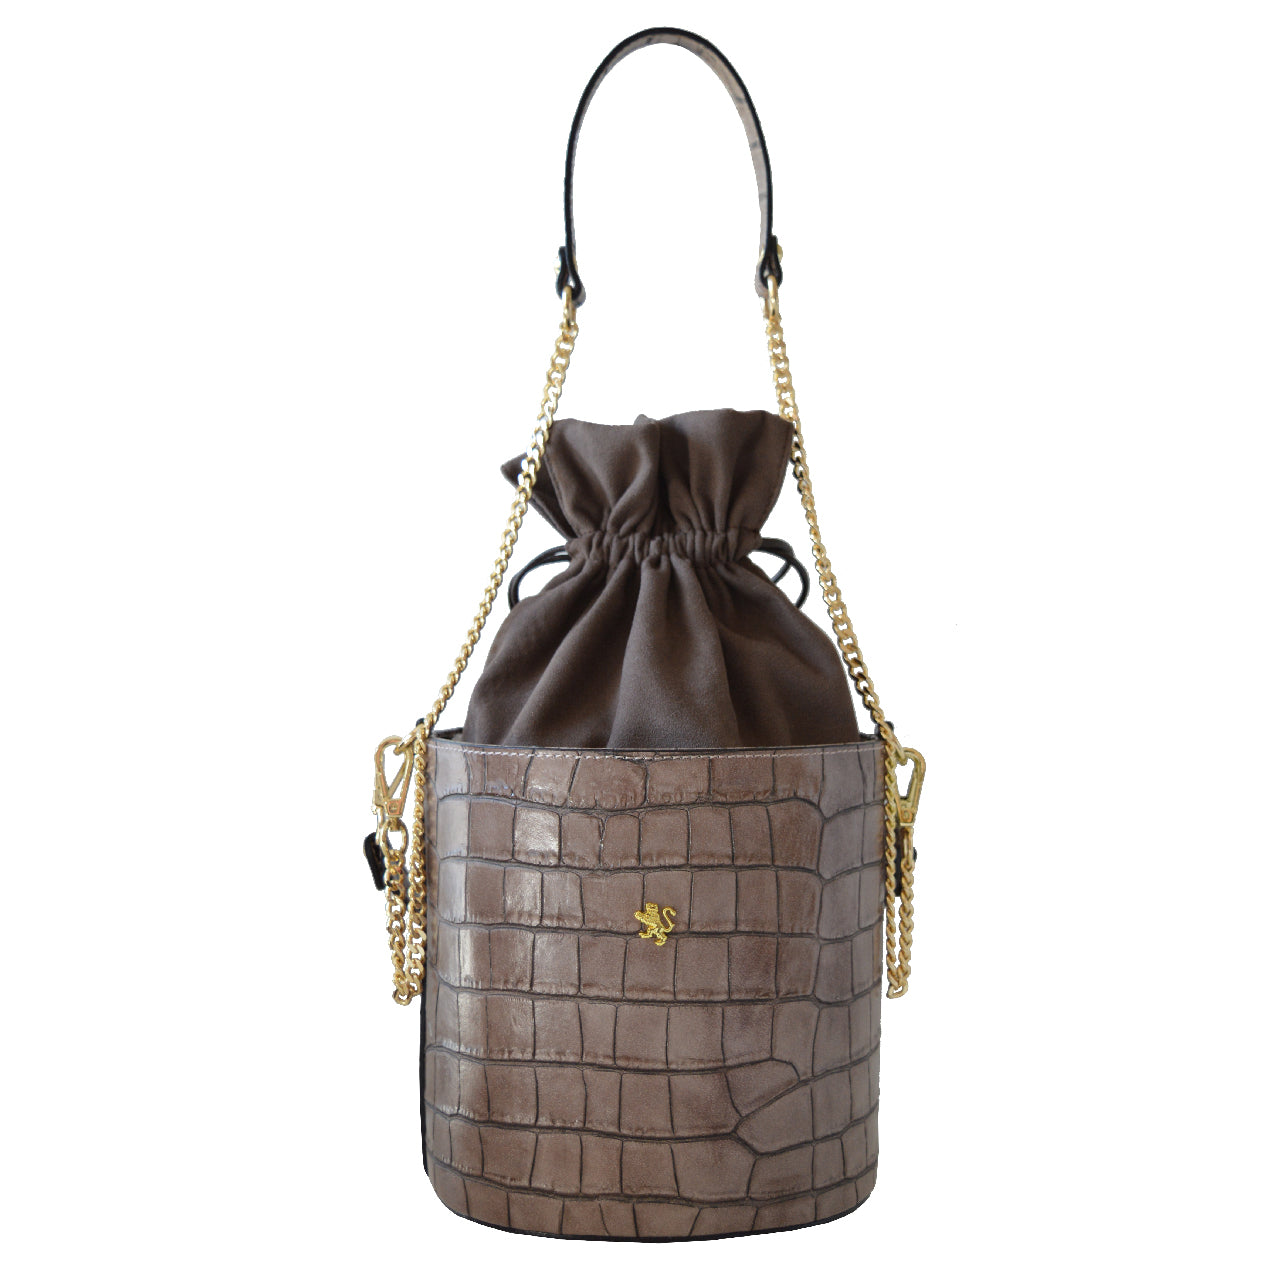 Pratesi Secchiello Lady bag K335 in genuine Italian leather - Croco Embossed Leather Violet